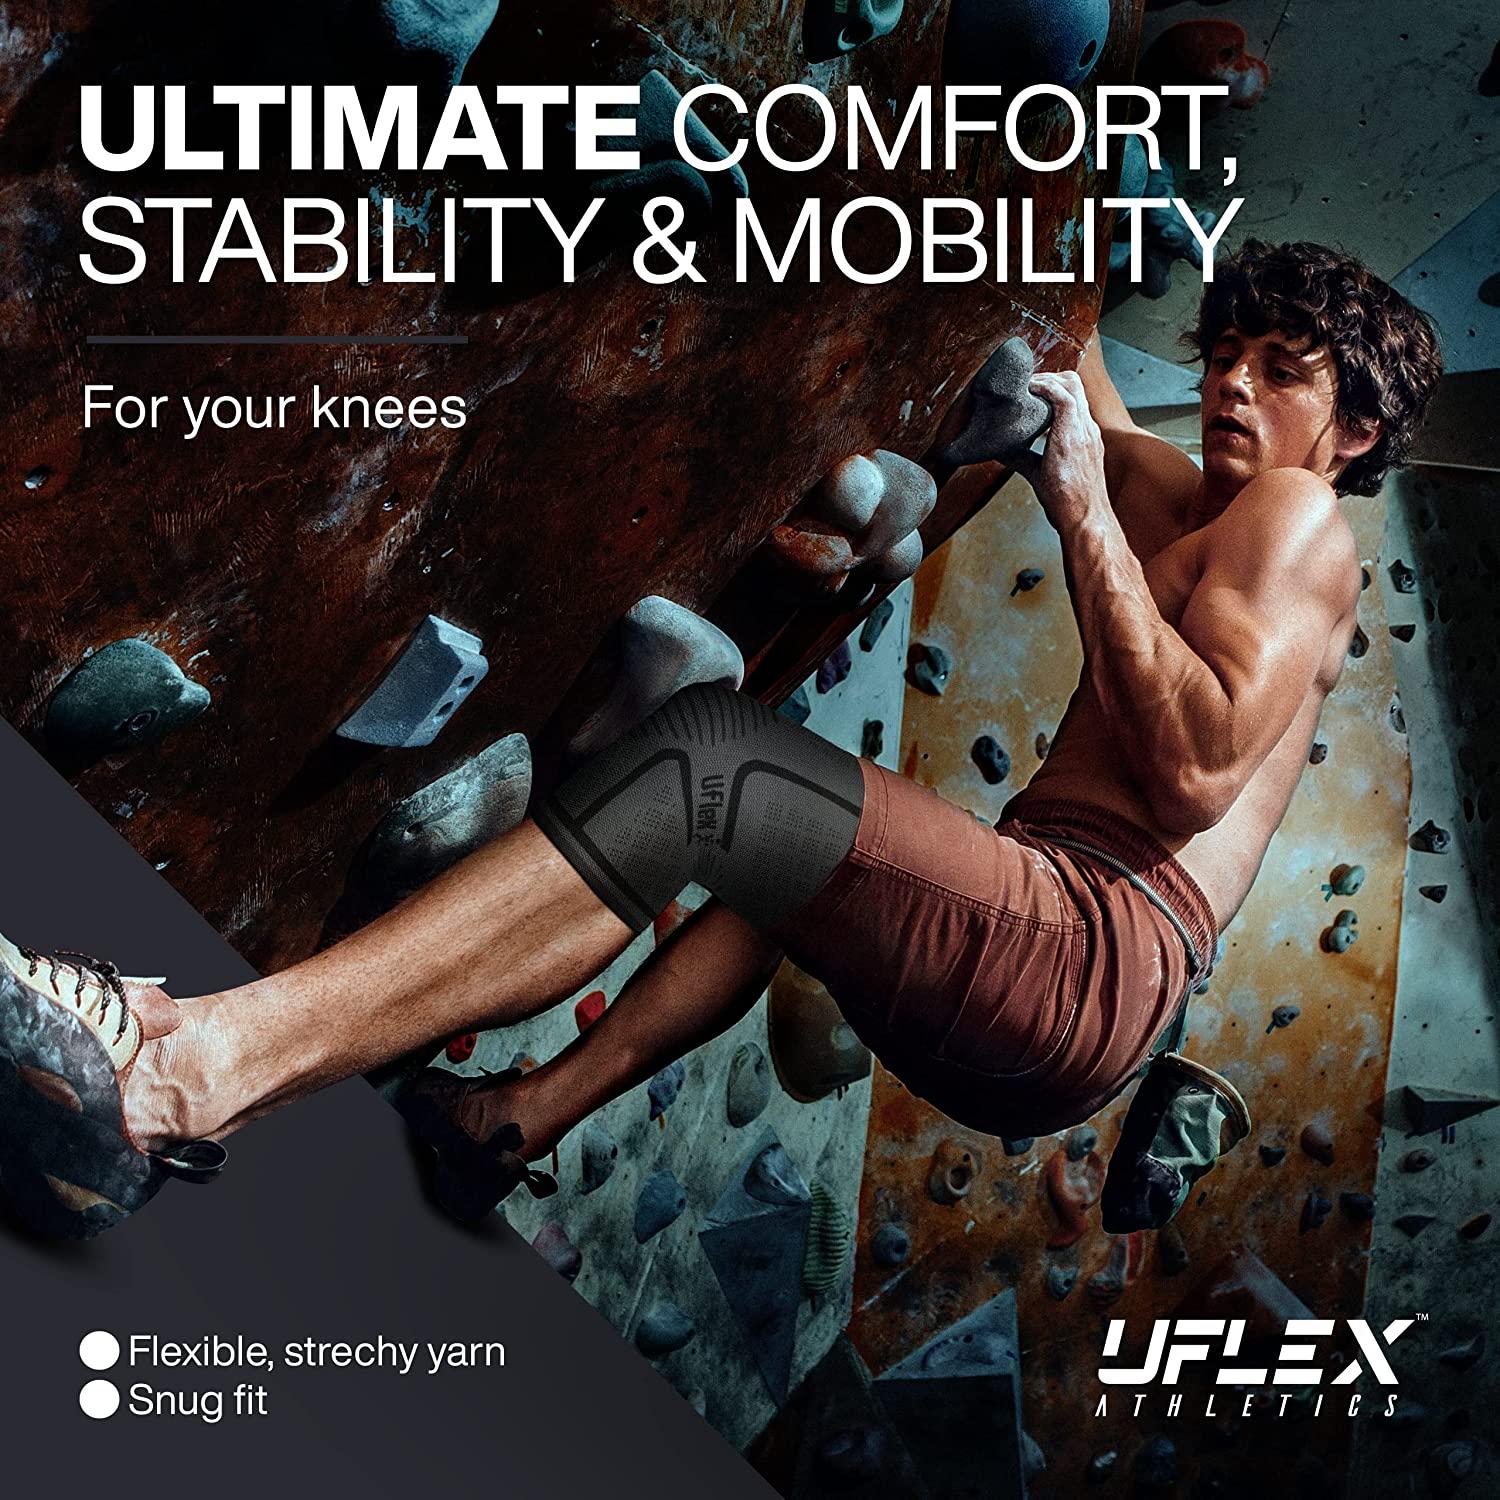  Uflex Athletics